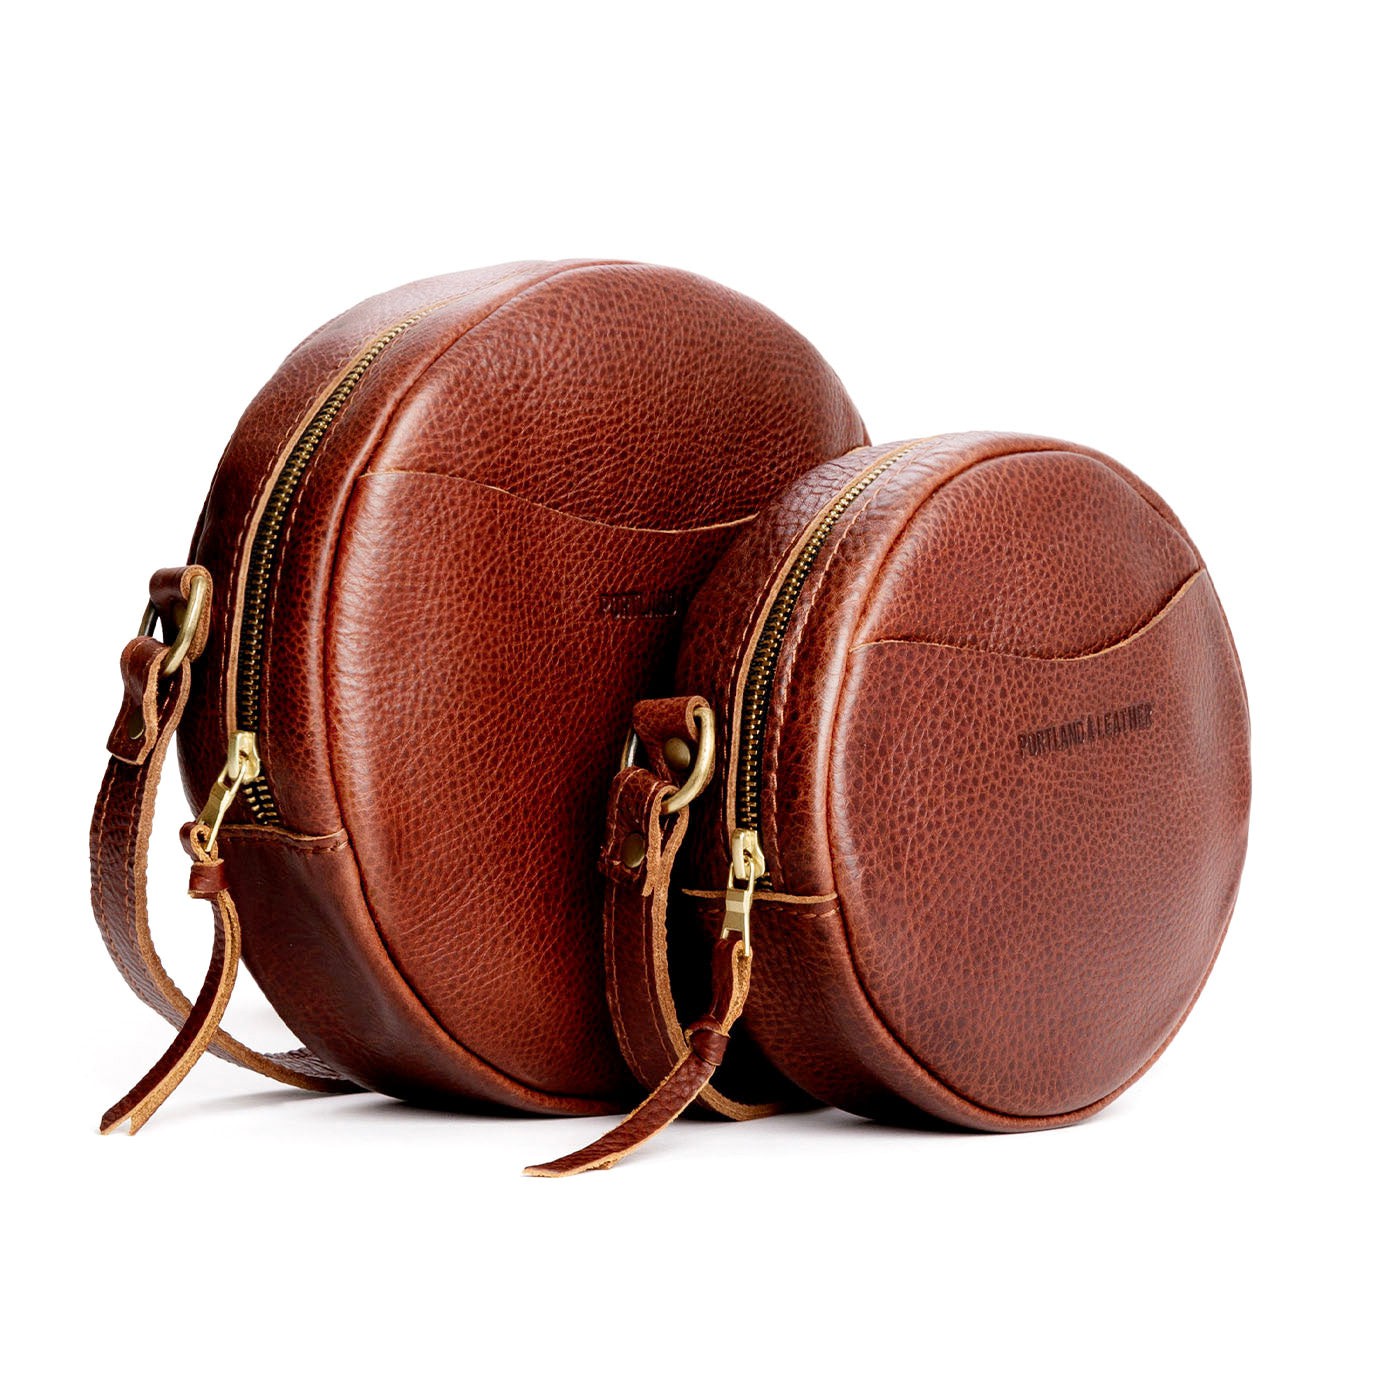 All Color: Nutmeg | handmade leather purse circle bag